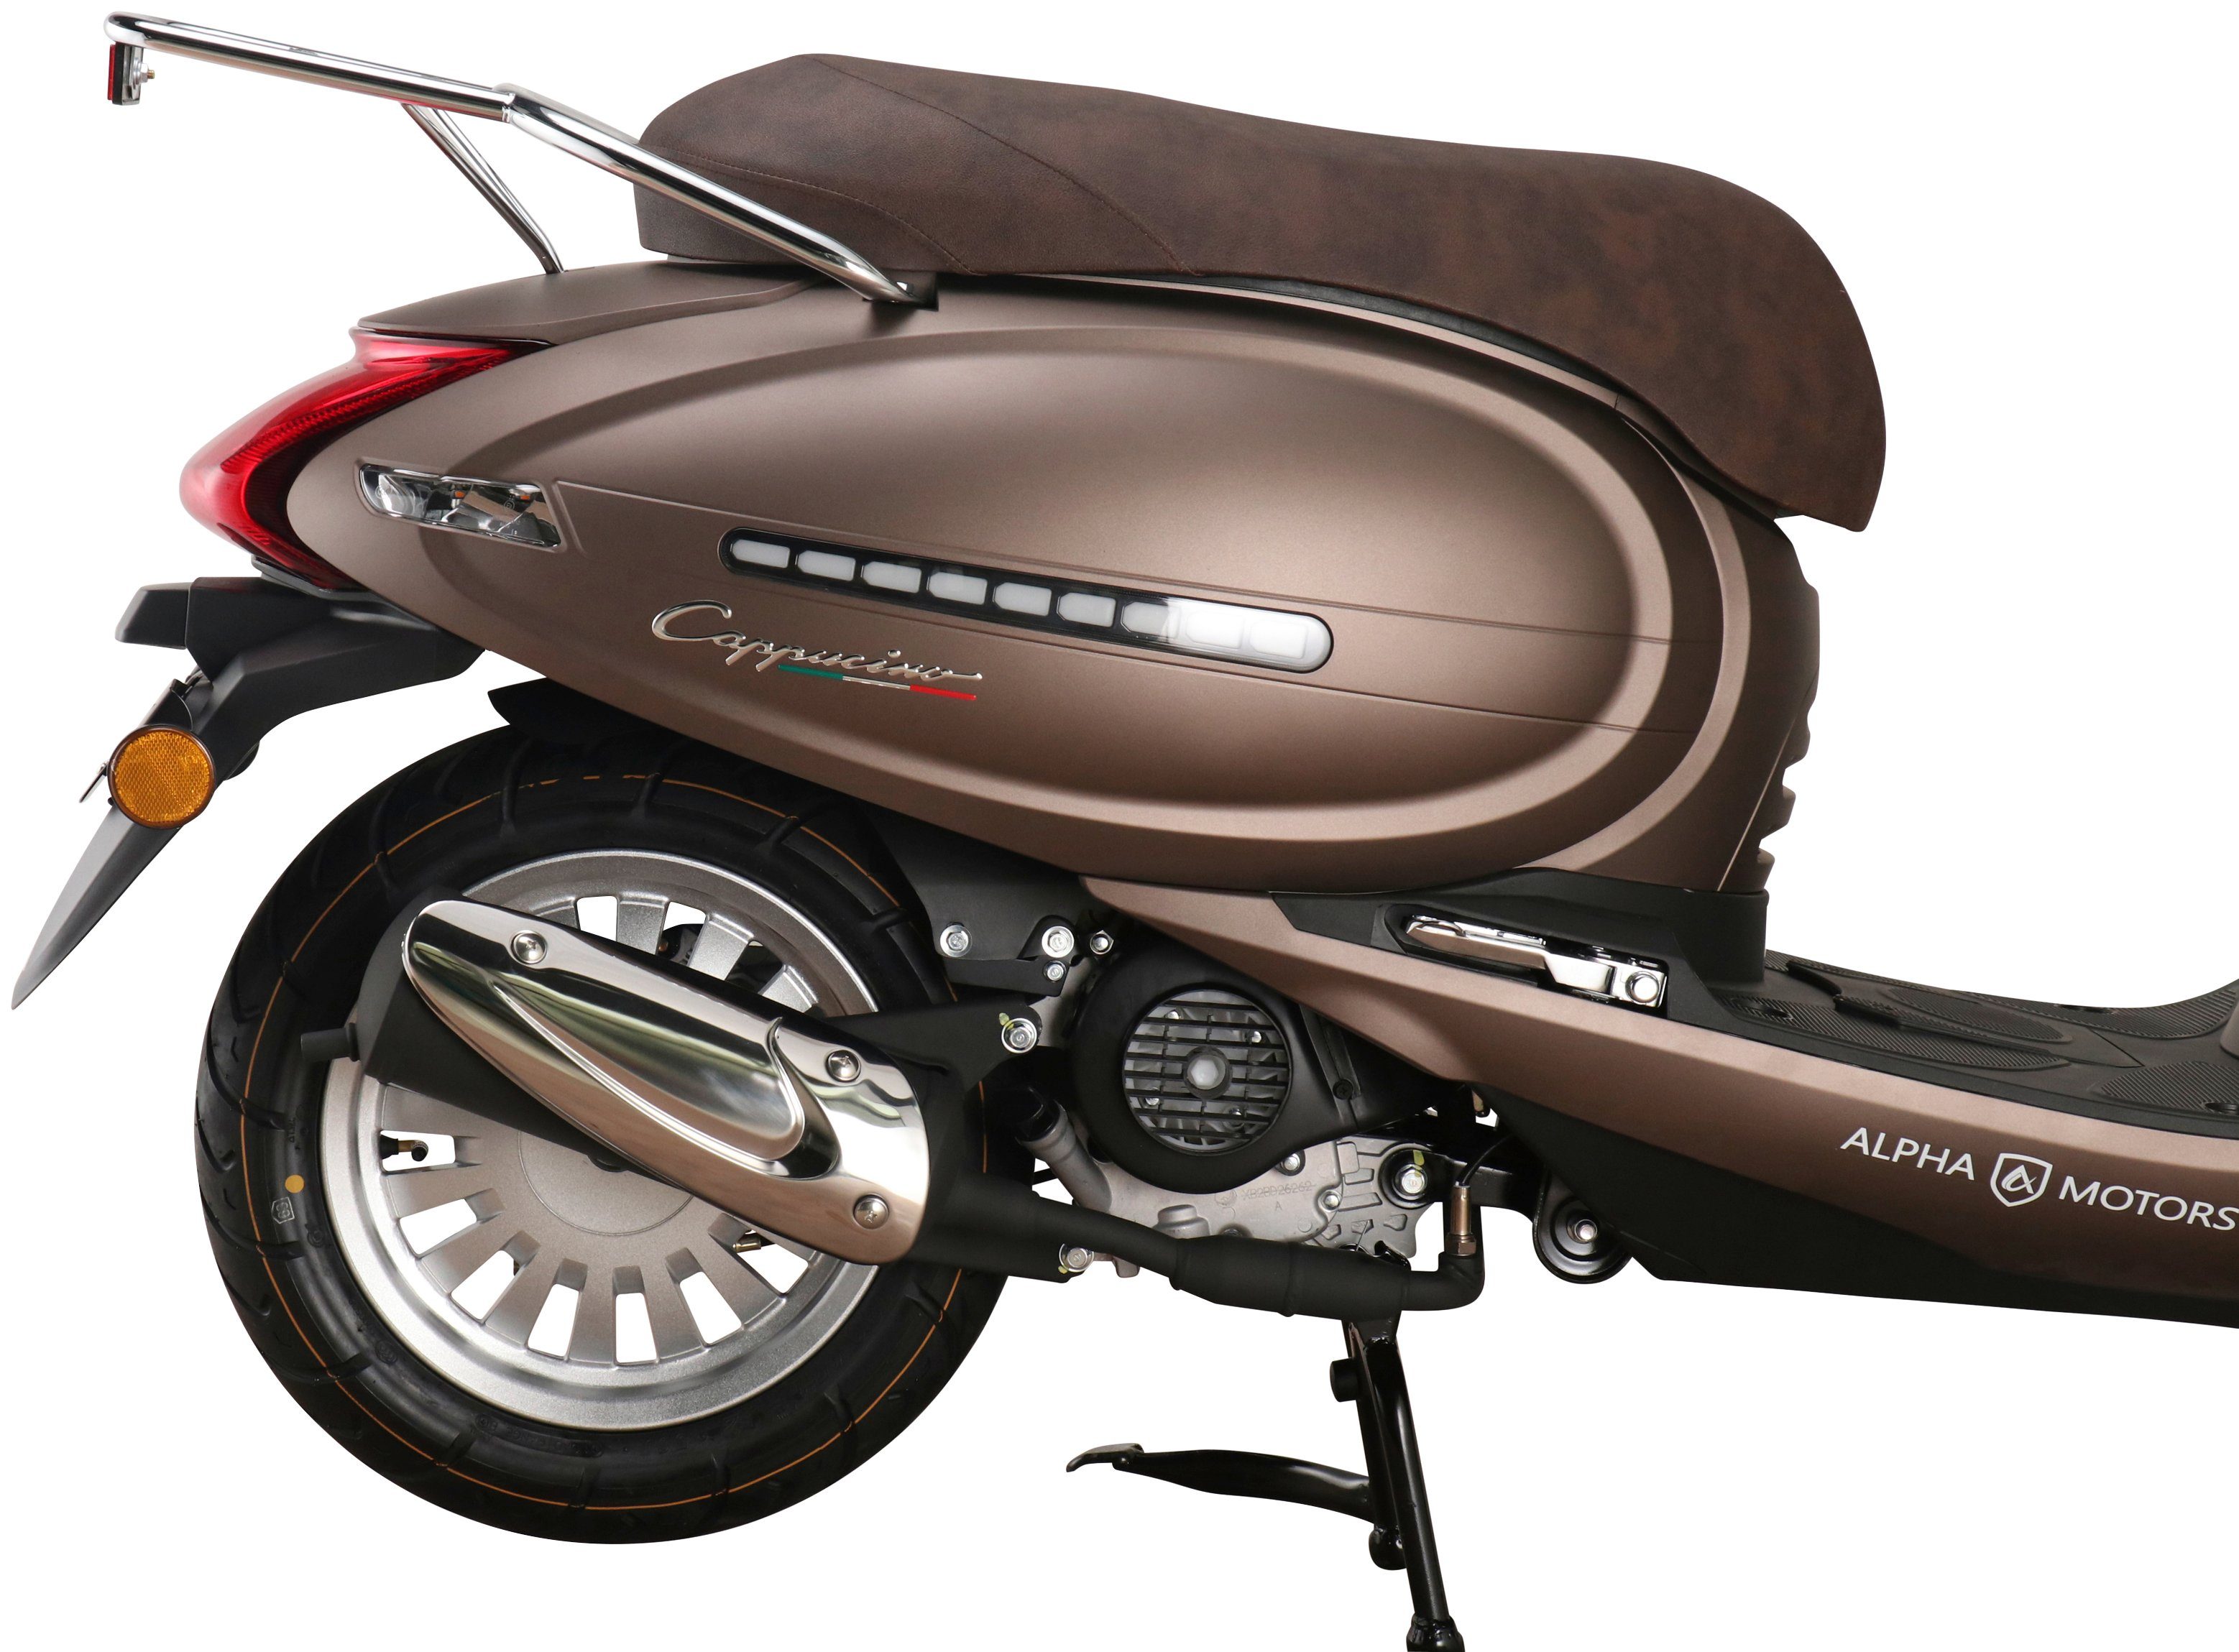 Motorroller 125 Alpha km/h, 85 Euro 5 ccm, Cappucino, Motors